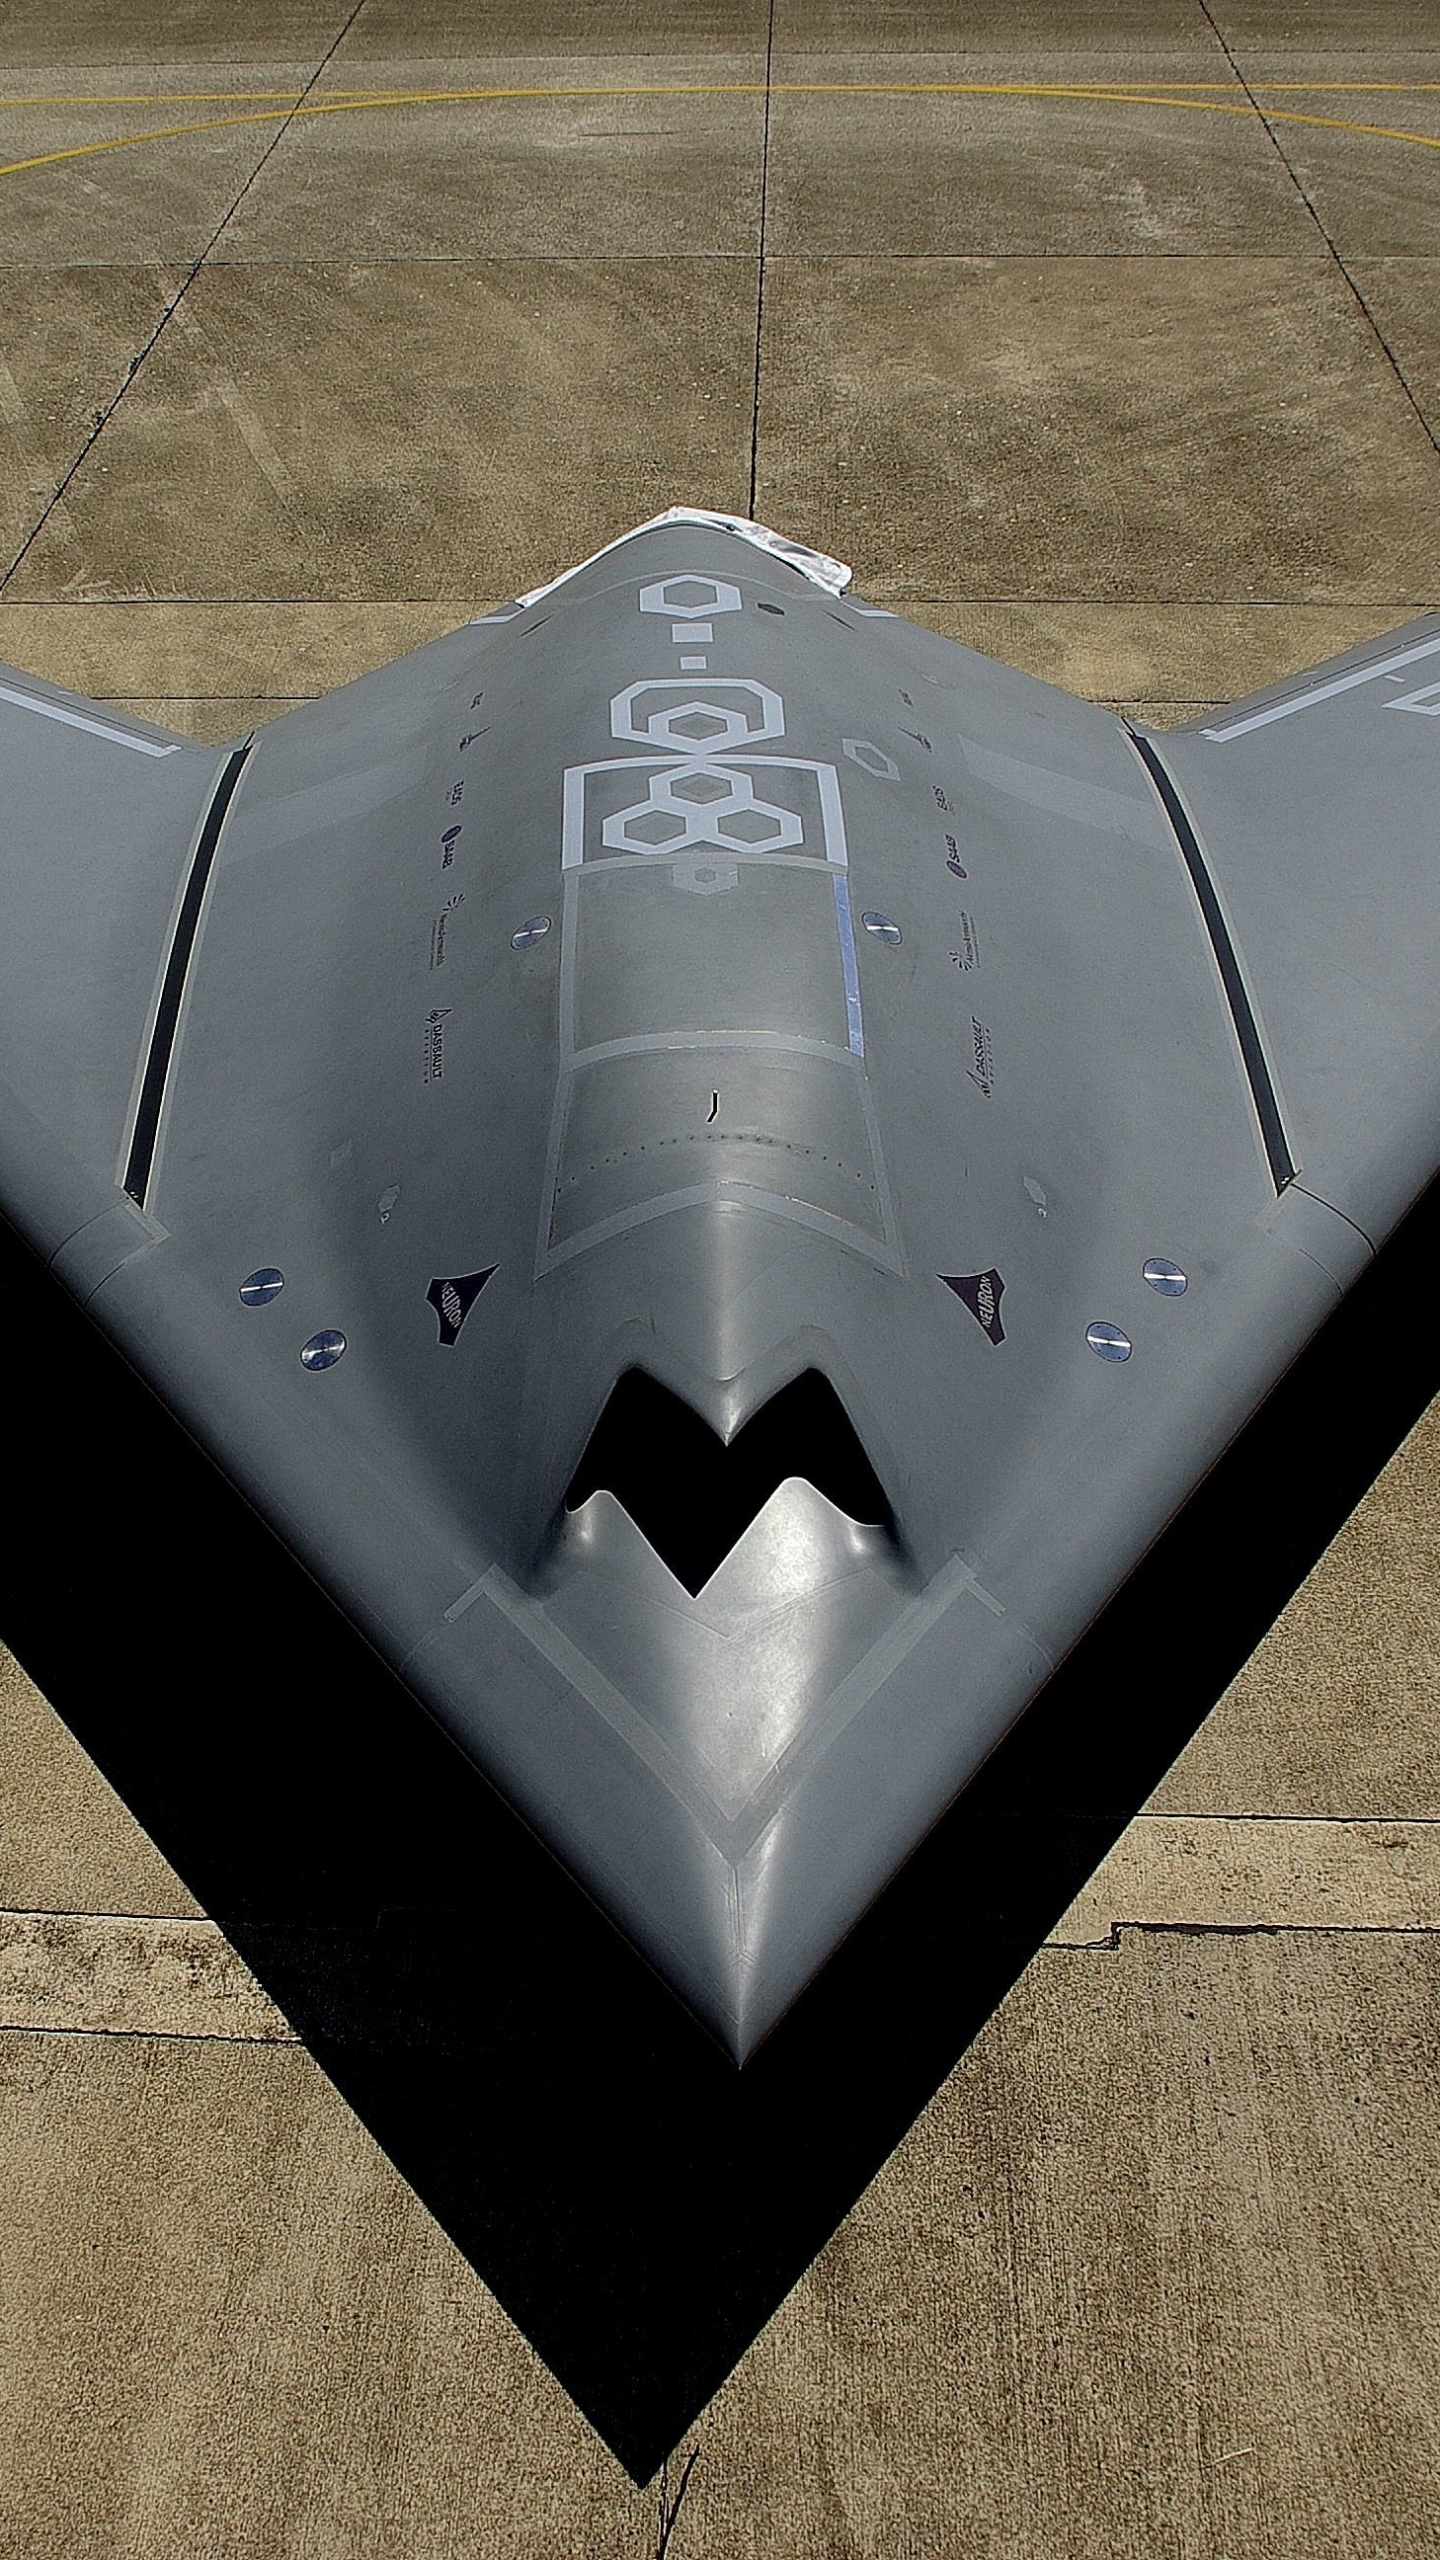 Northrop Grumman X-47B Unmanned Combat Air System (UCAS)